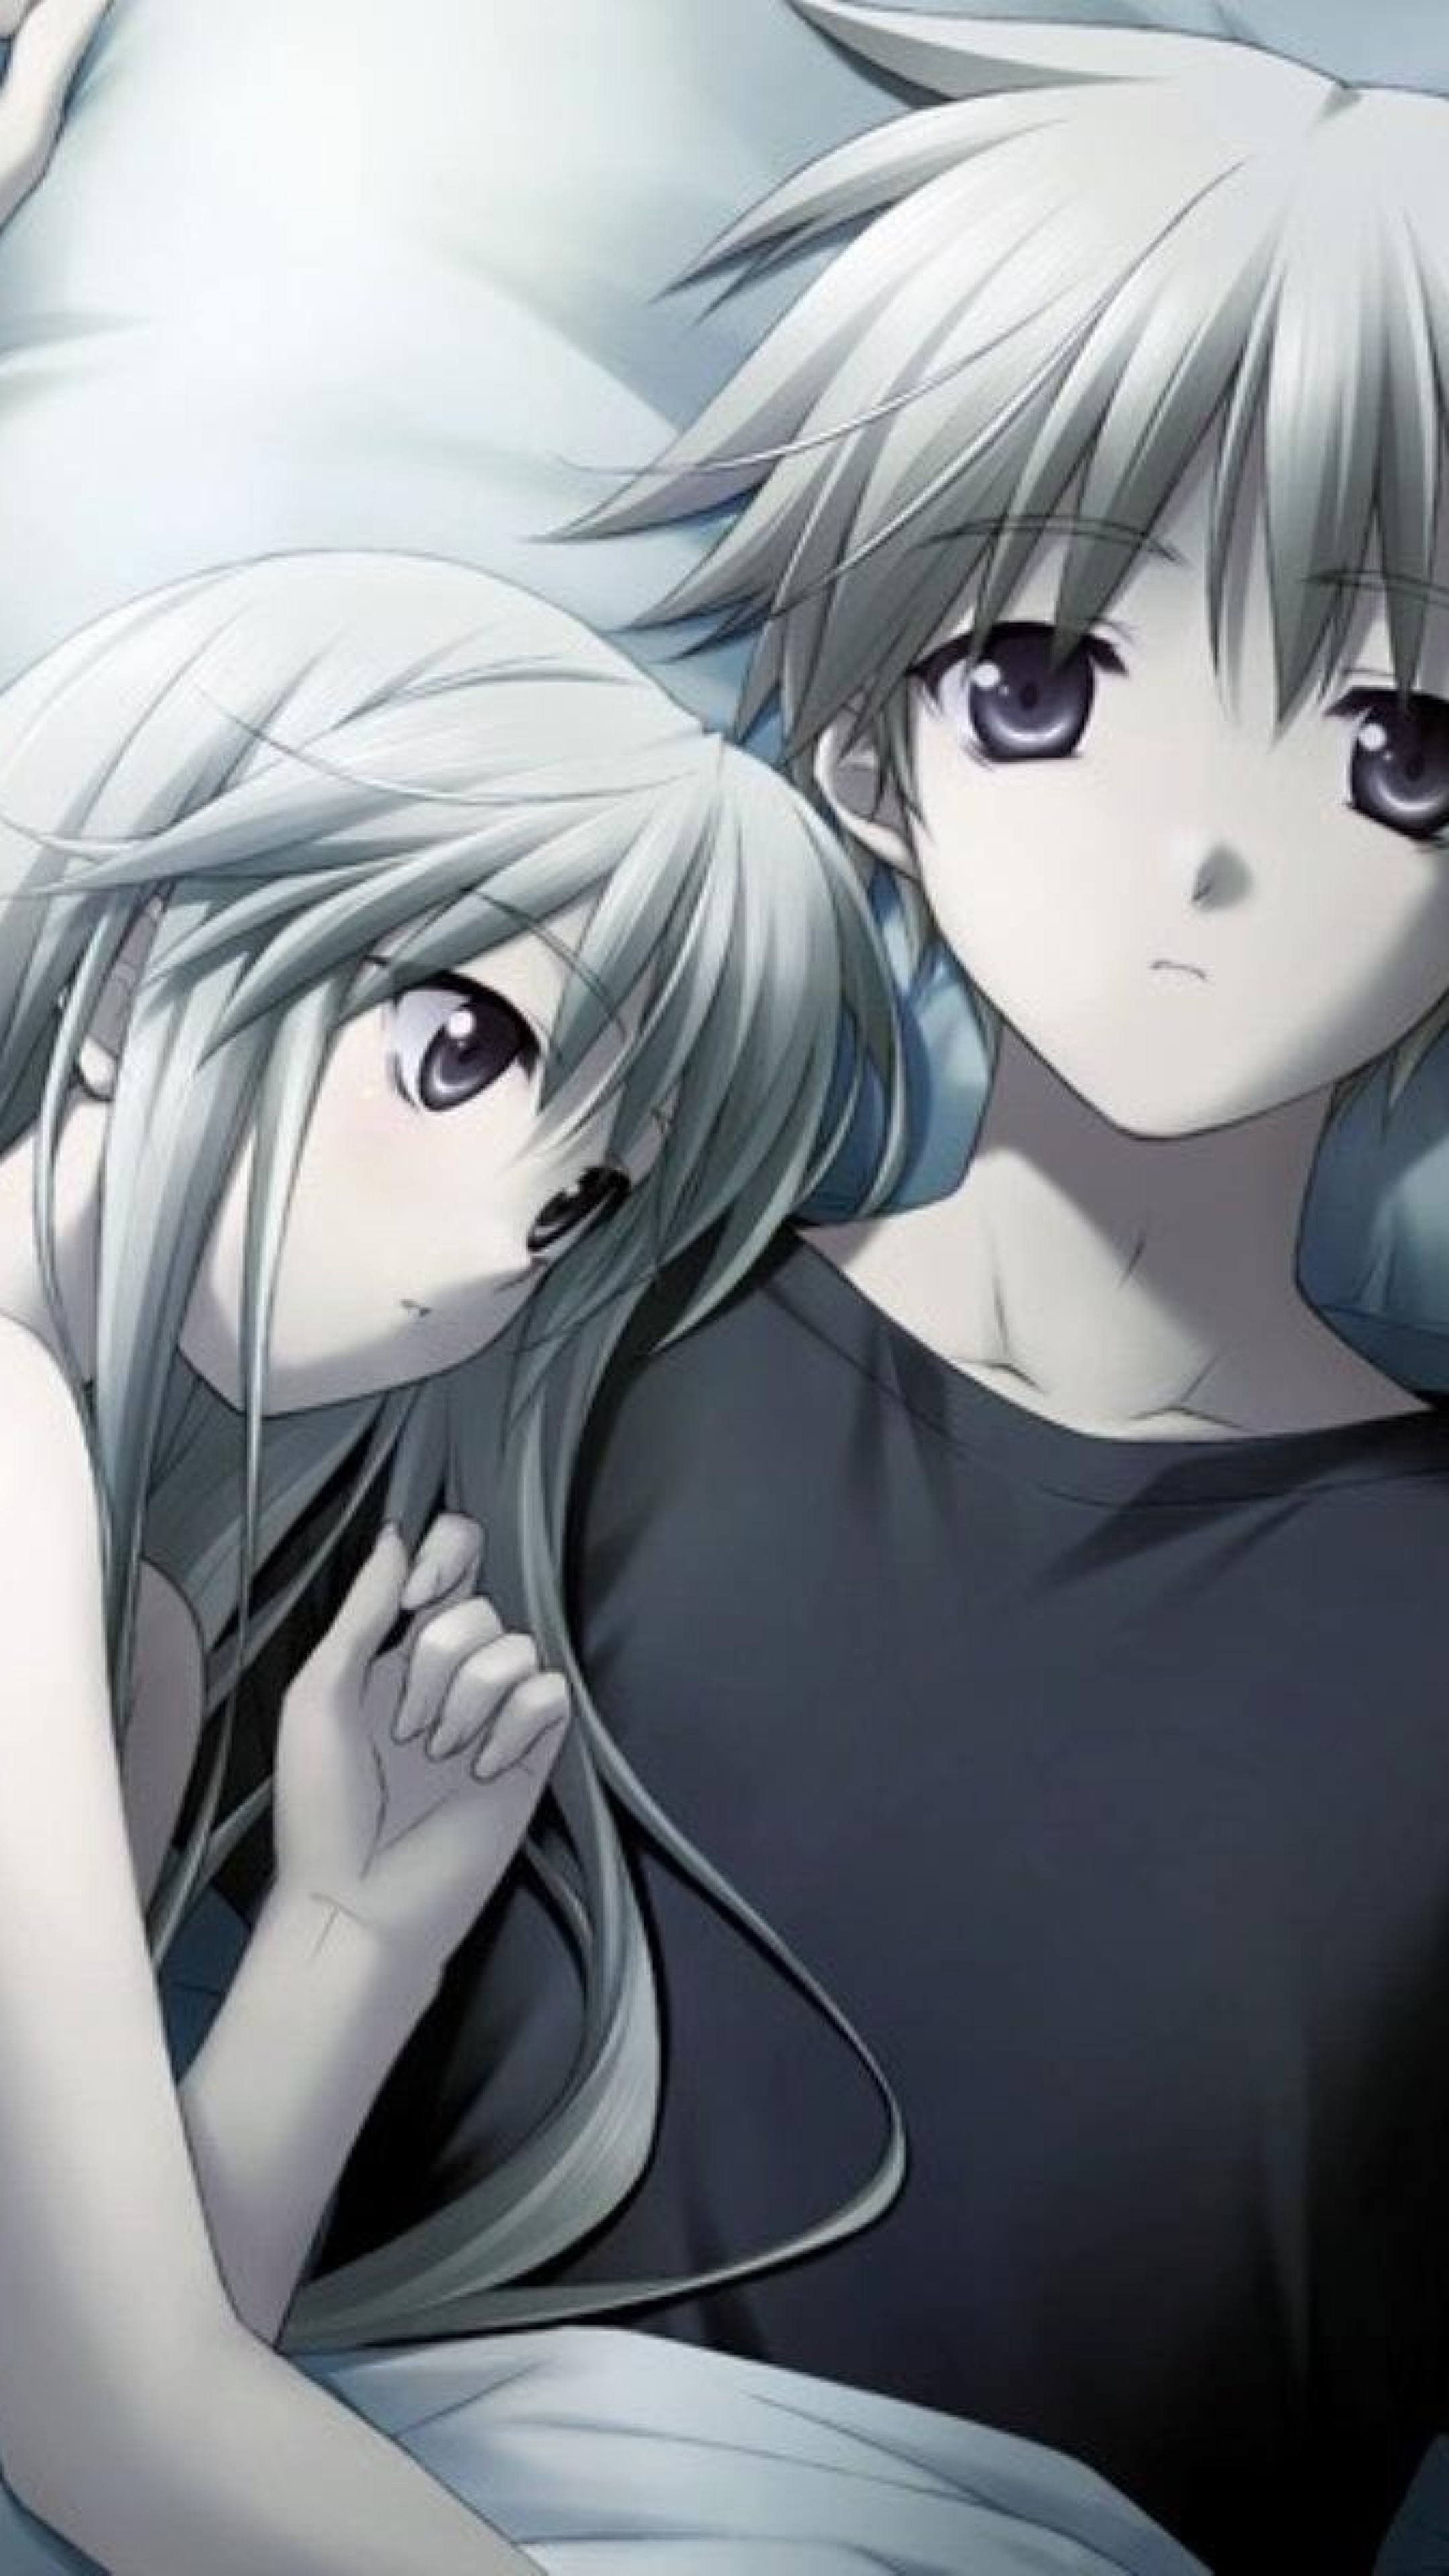 Foto Gambar Anime Love - IMAGESEE